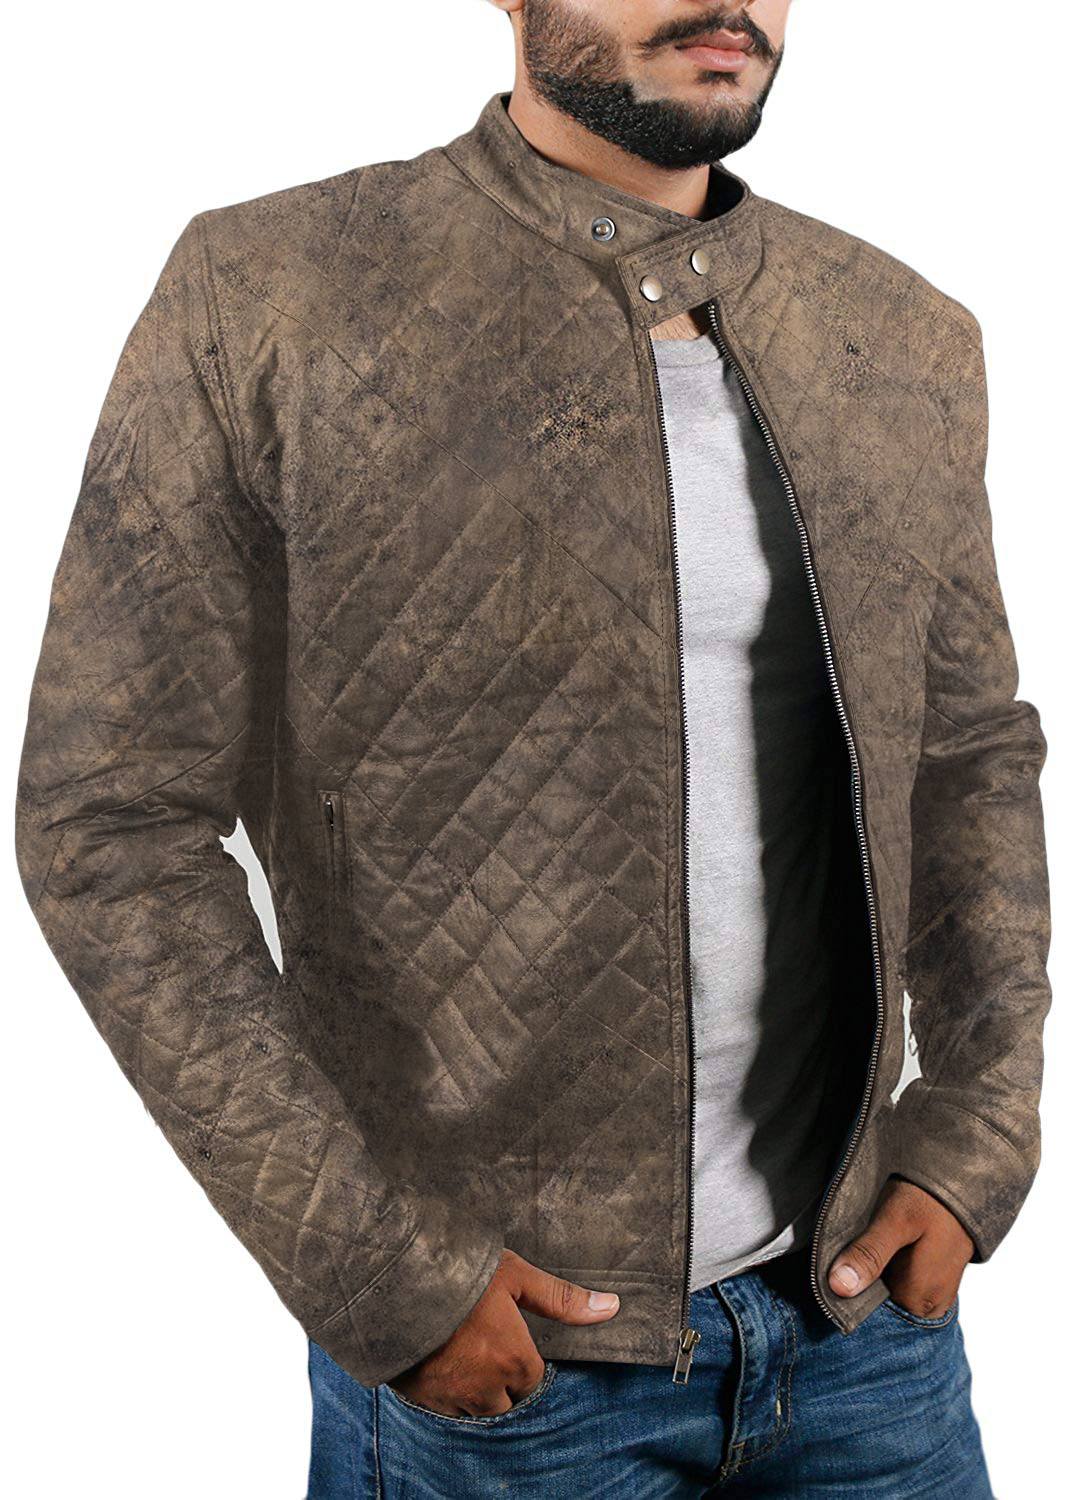 Leather Jackets Hub Mens Genuine Lambskin Leather Jacket (Black, Fencing Jacket) - 1501324